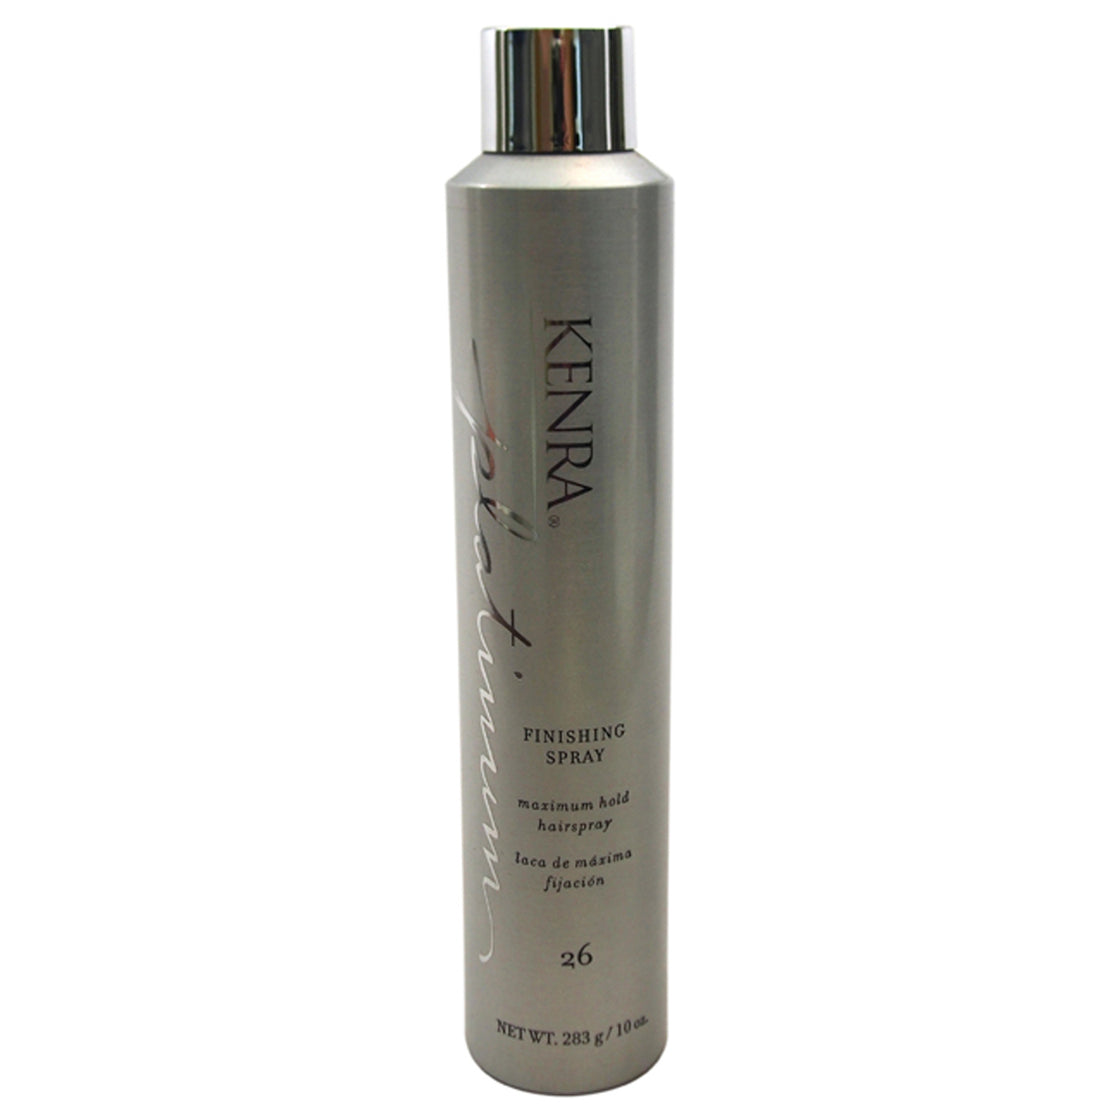 Platinum Finishing Spray - 26 Maximum Hold Hairspray by Kenra for Unisex - 10 oz Hairspray